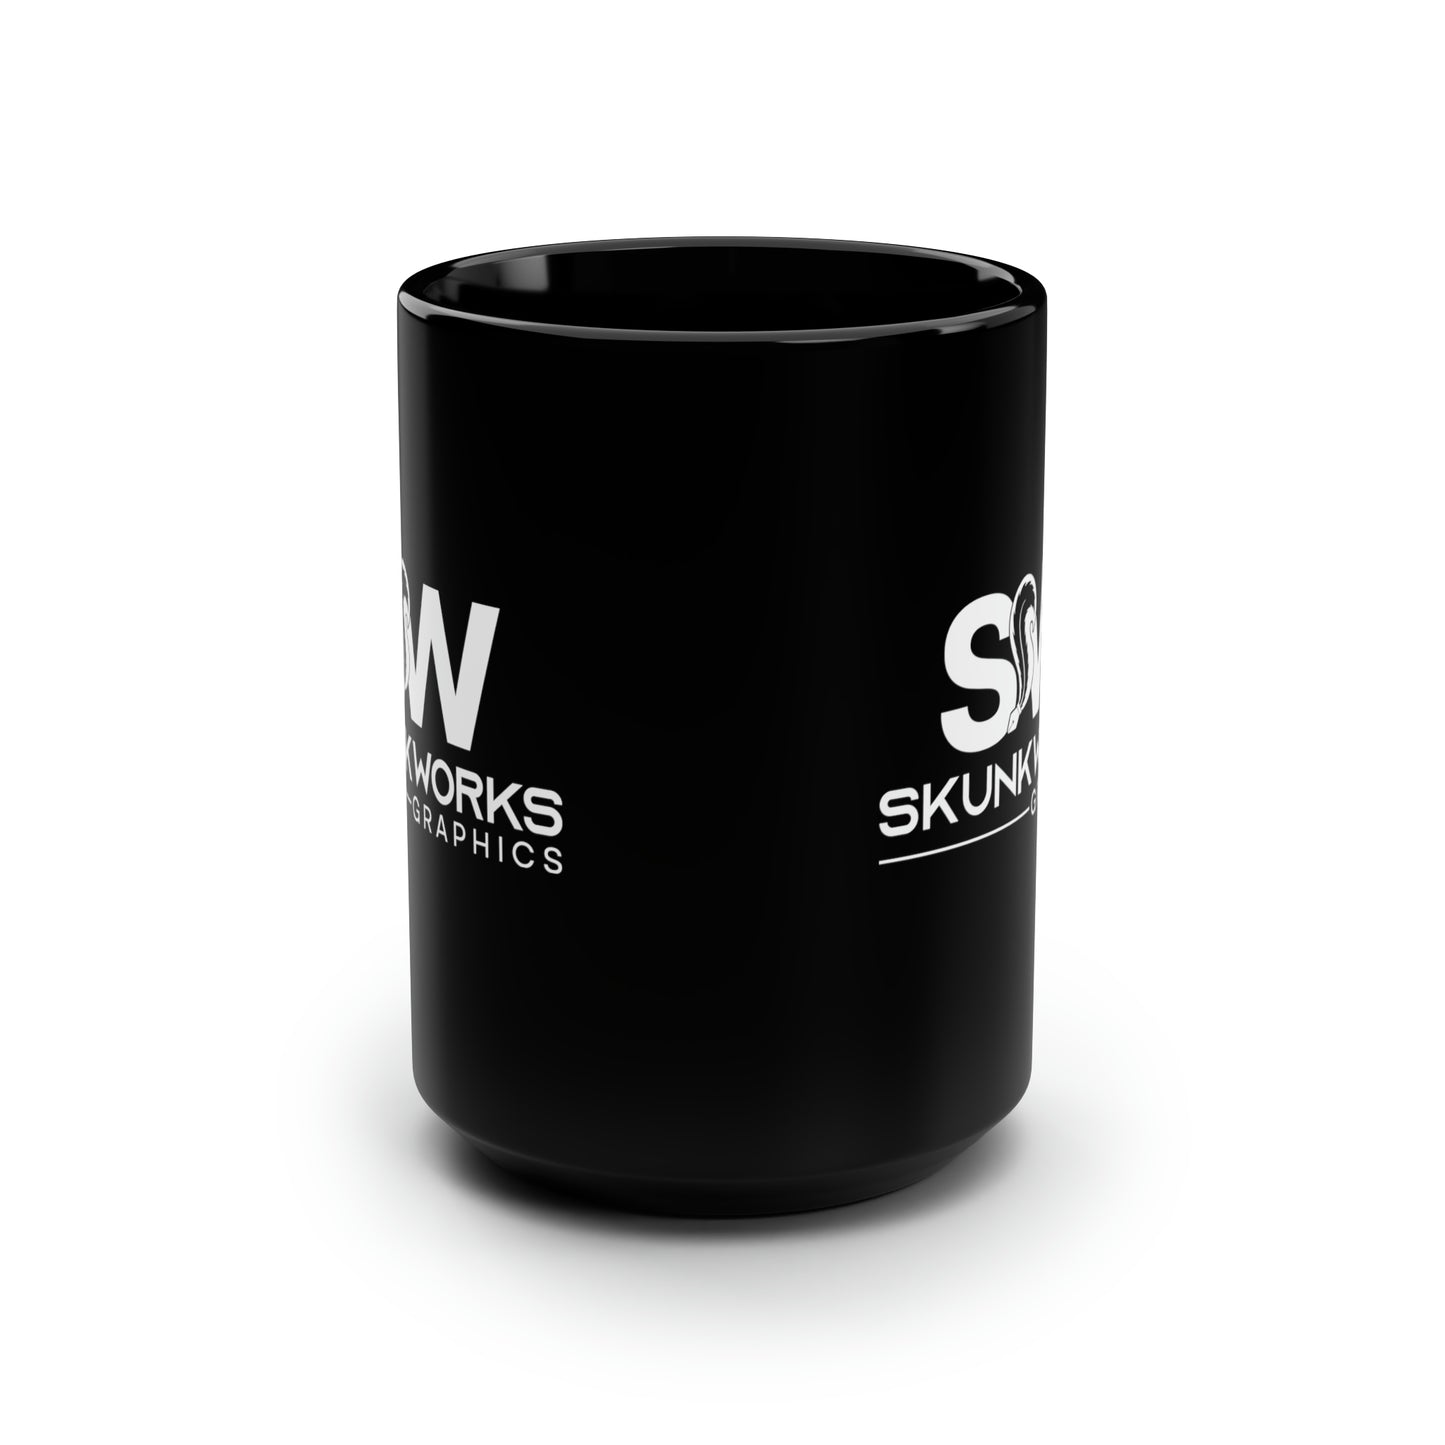 Skunkworks Graphics Coffee Mug